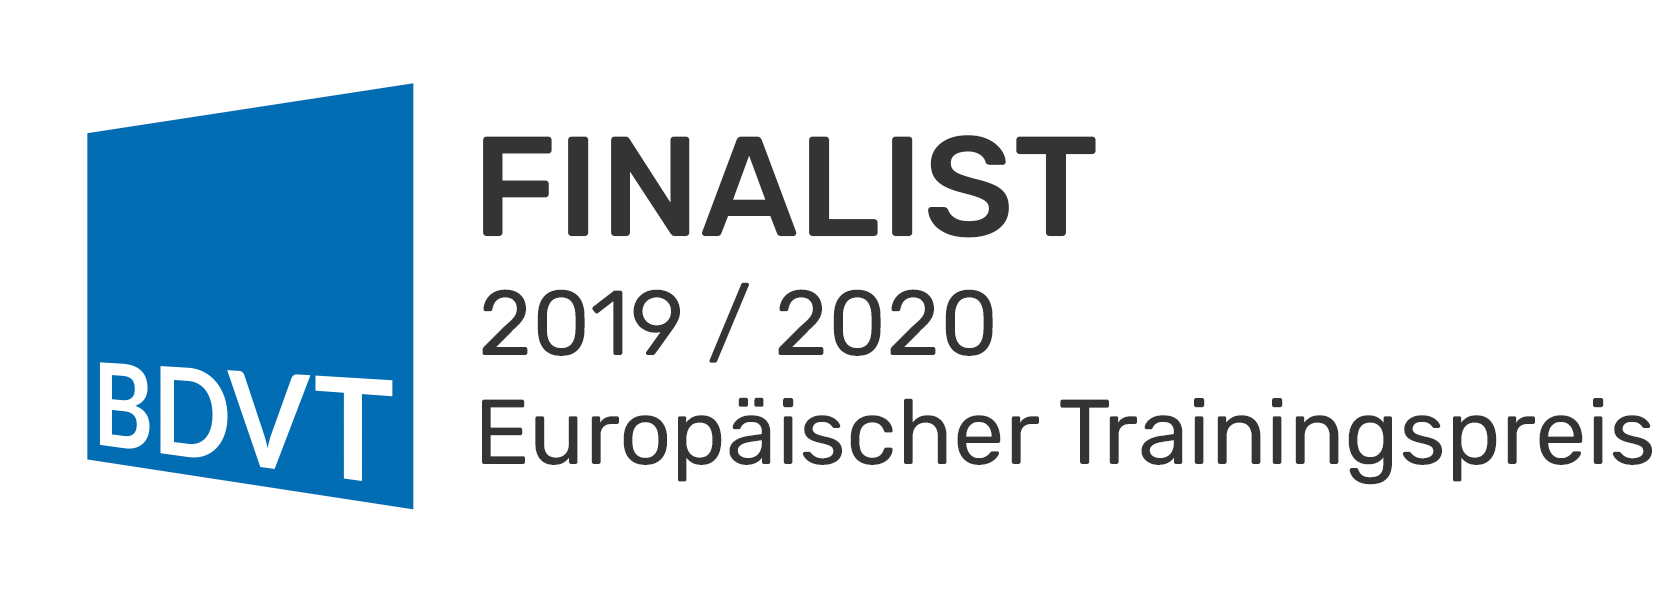 Finalist 2019 / 2020 Europäischer Trainingspreis